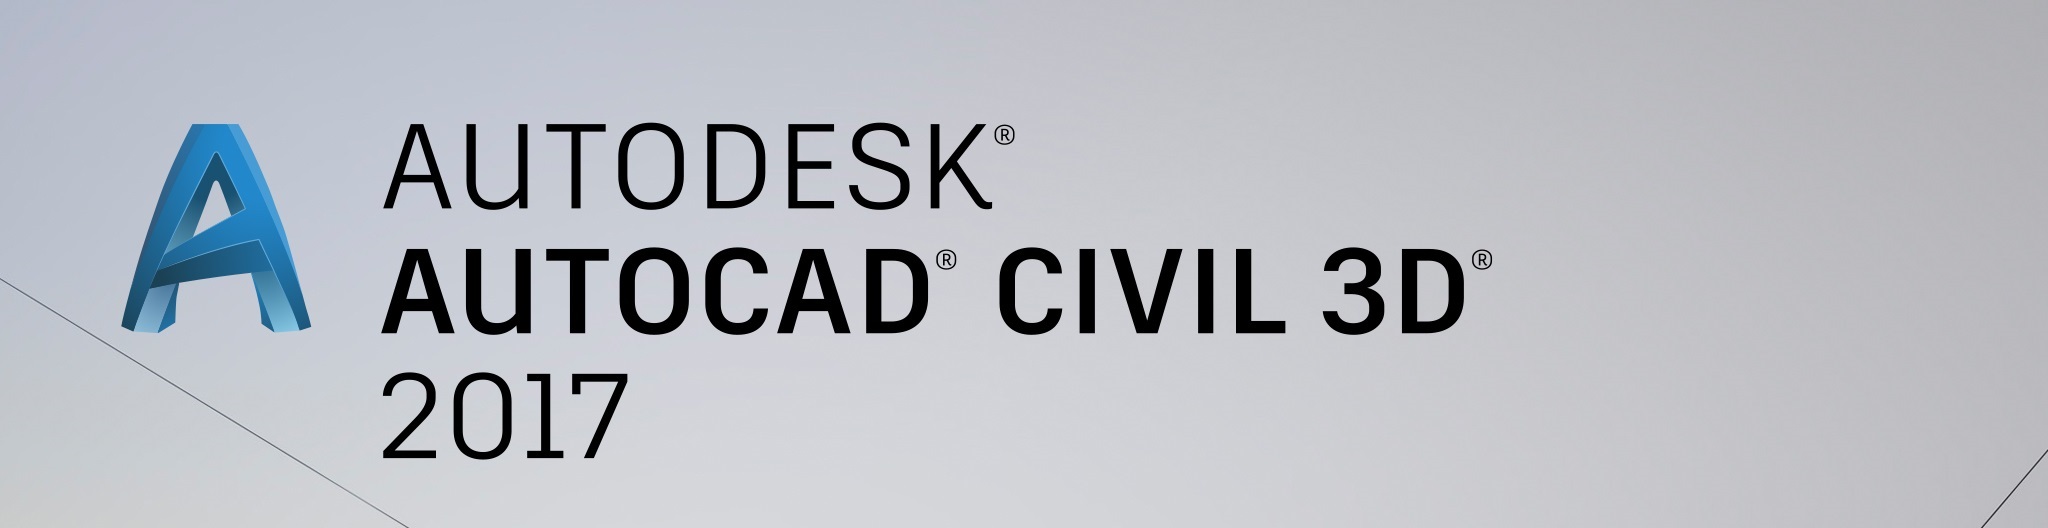 autocad-civil-3d-2017-badge-2048px.jpg